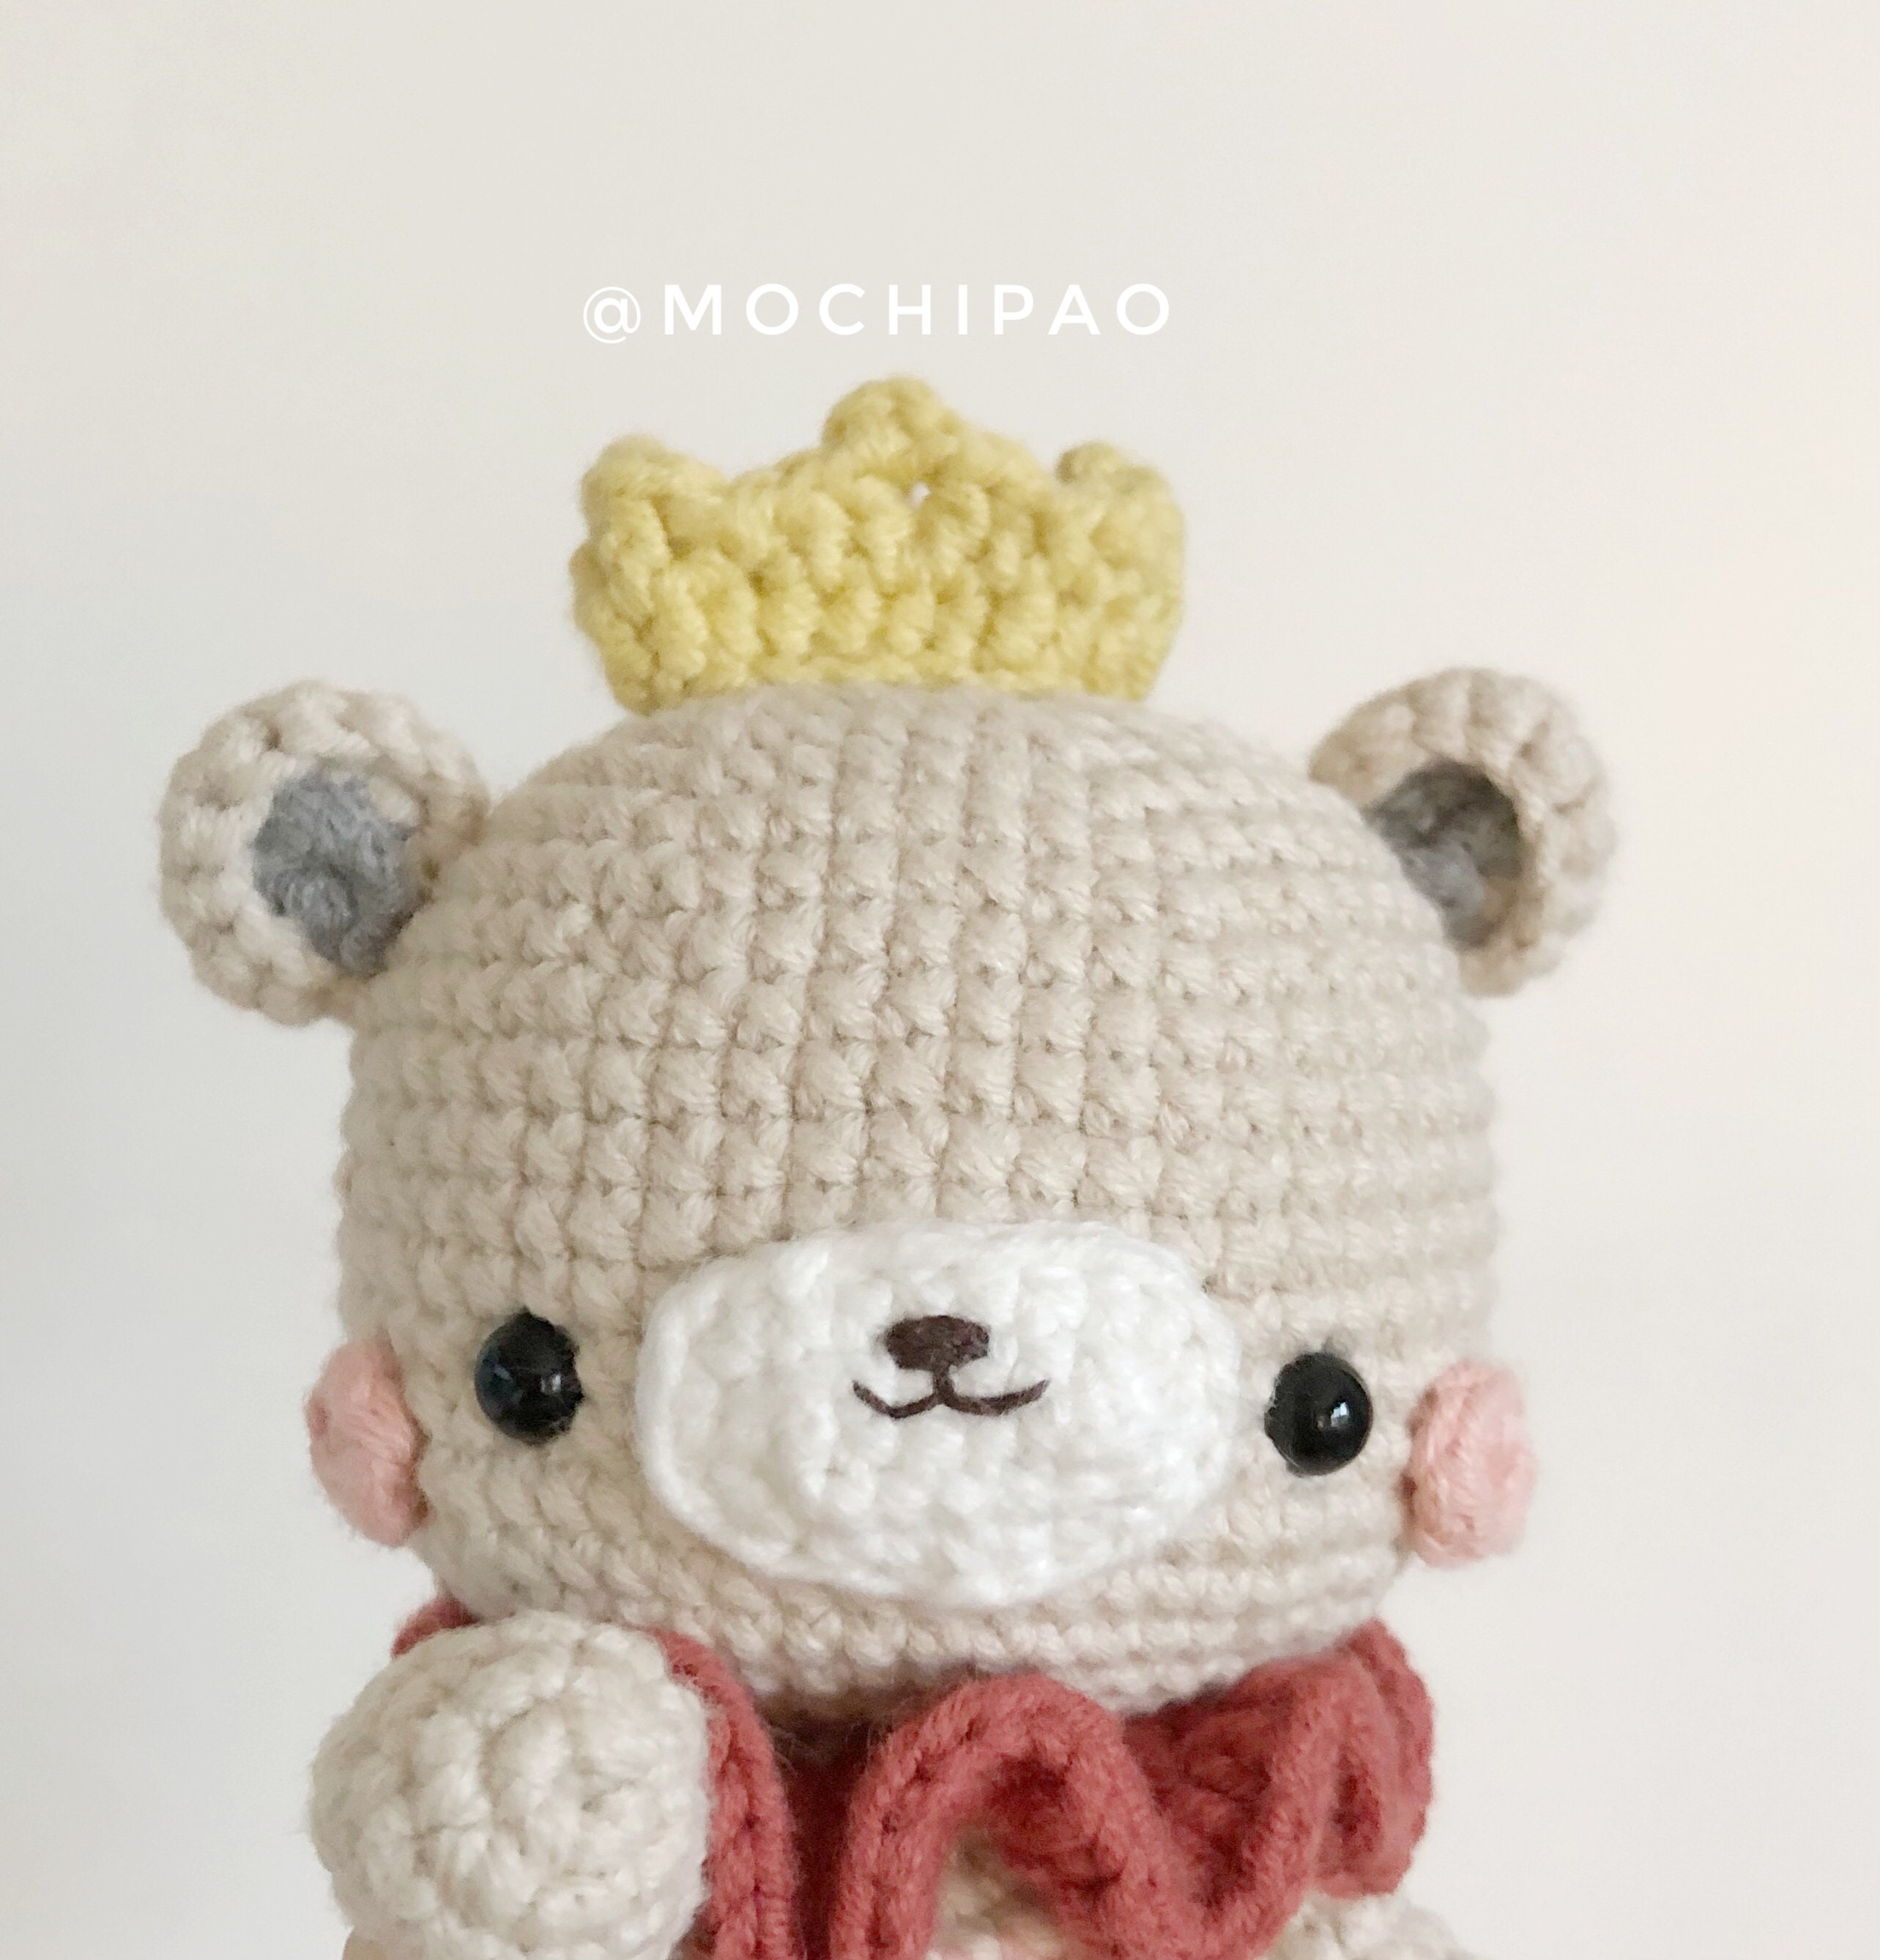 Crochet Kits DIY Crochet Amigurumi Panda Brother Pattern, Yarn, Crochet  Hook, Stuffing with All Accessories for Beginner : : Arts & Crafts